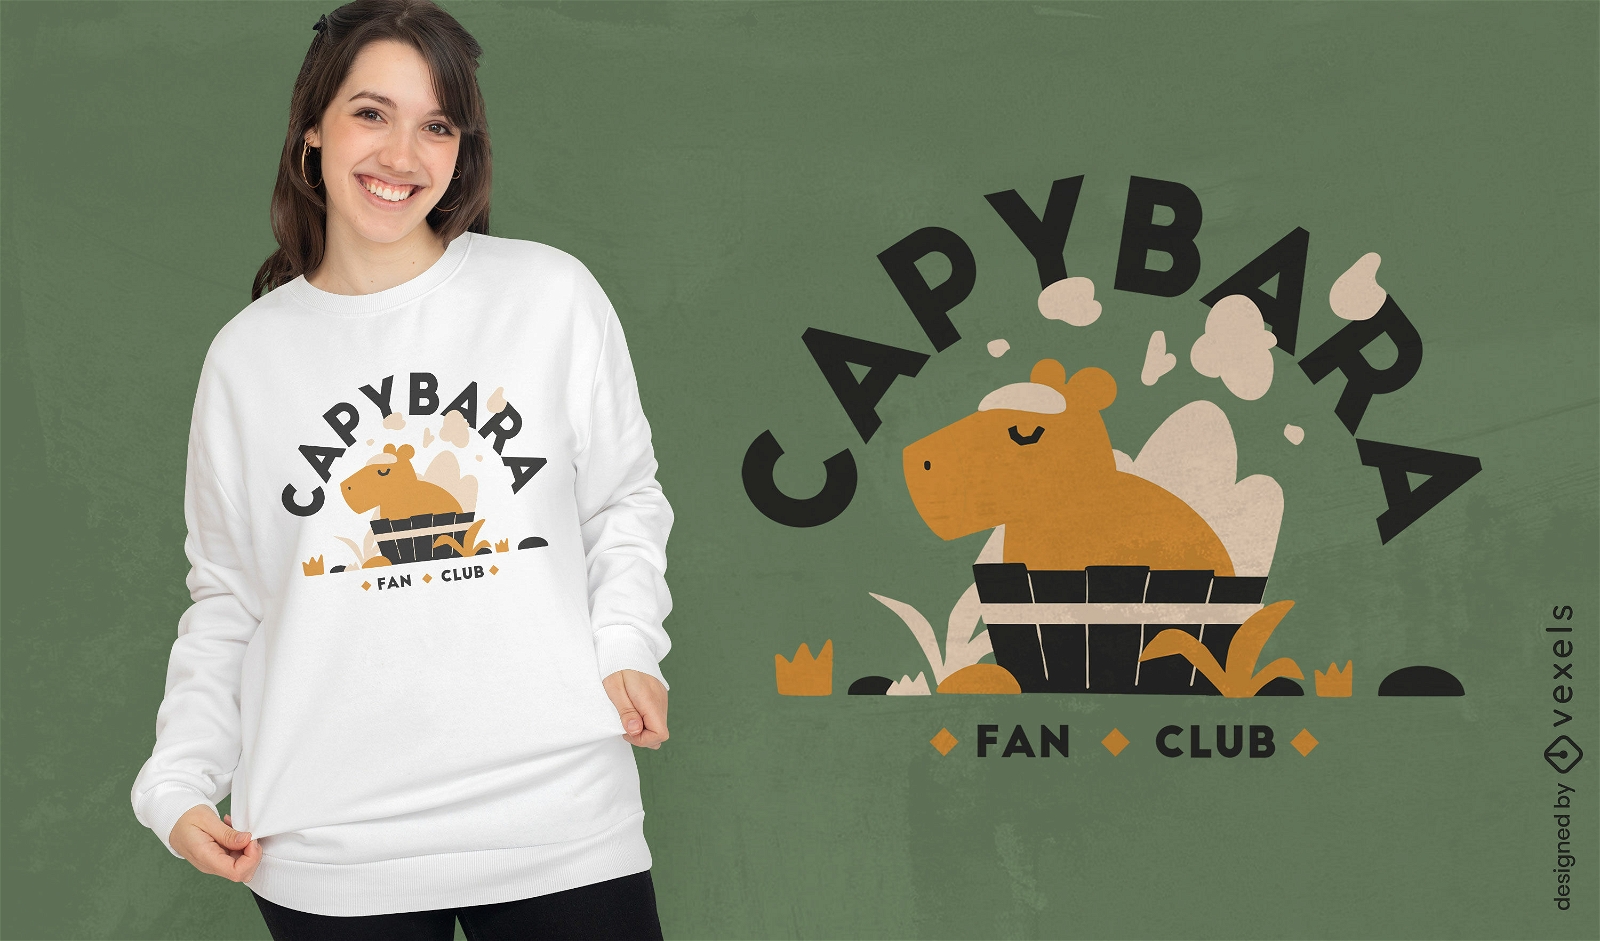 Capybara fan club t-shirt design